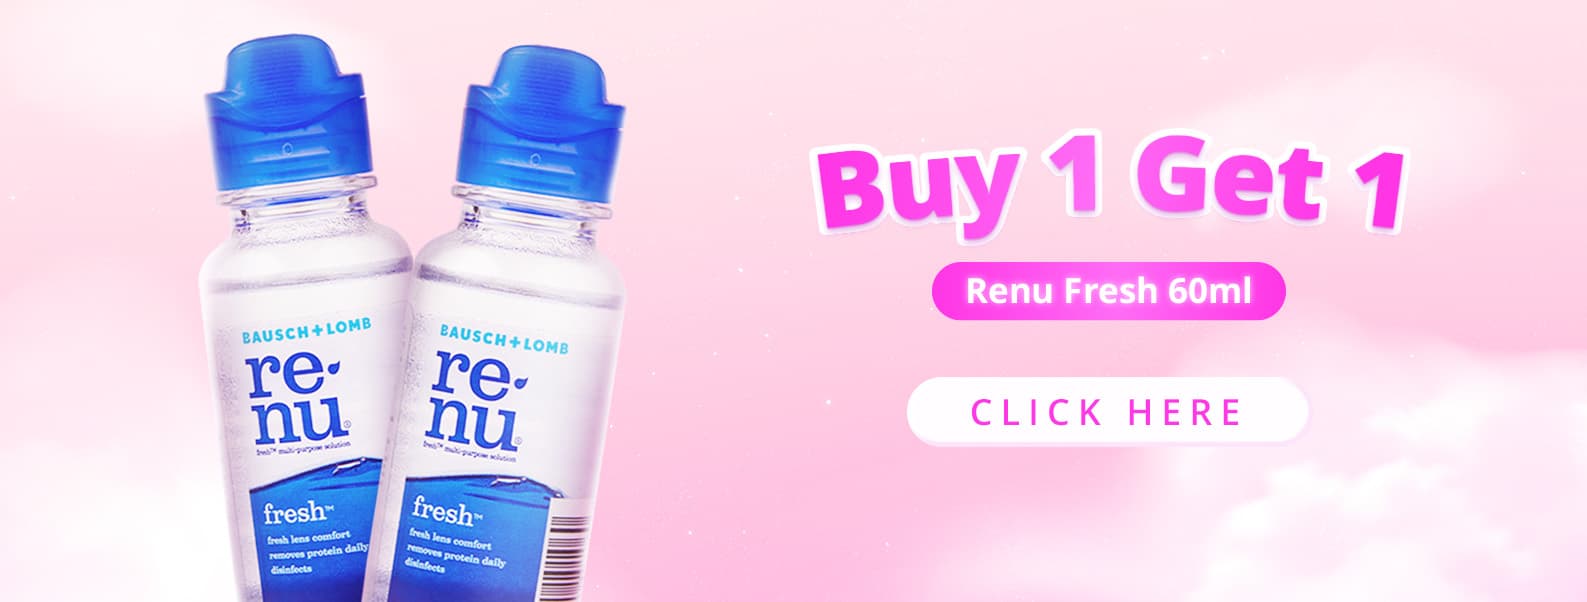 Buy 1 Get 1 renu desktop banner.jpg